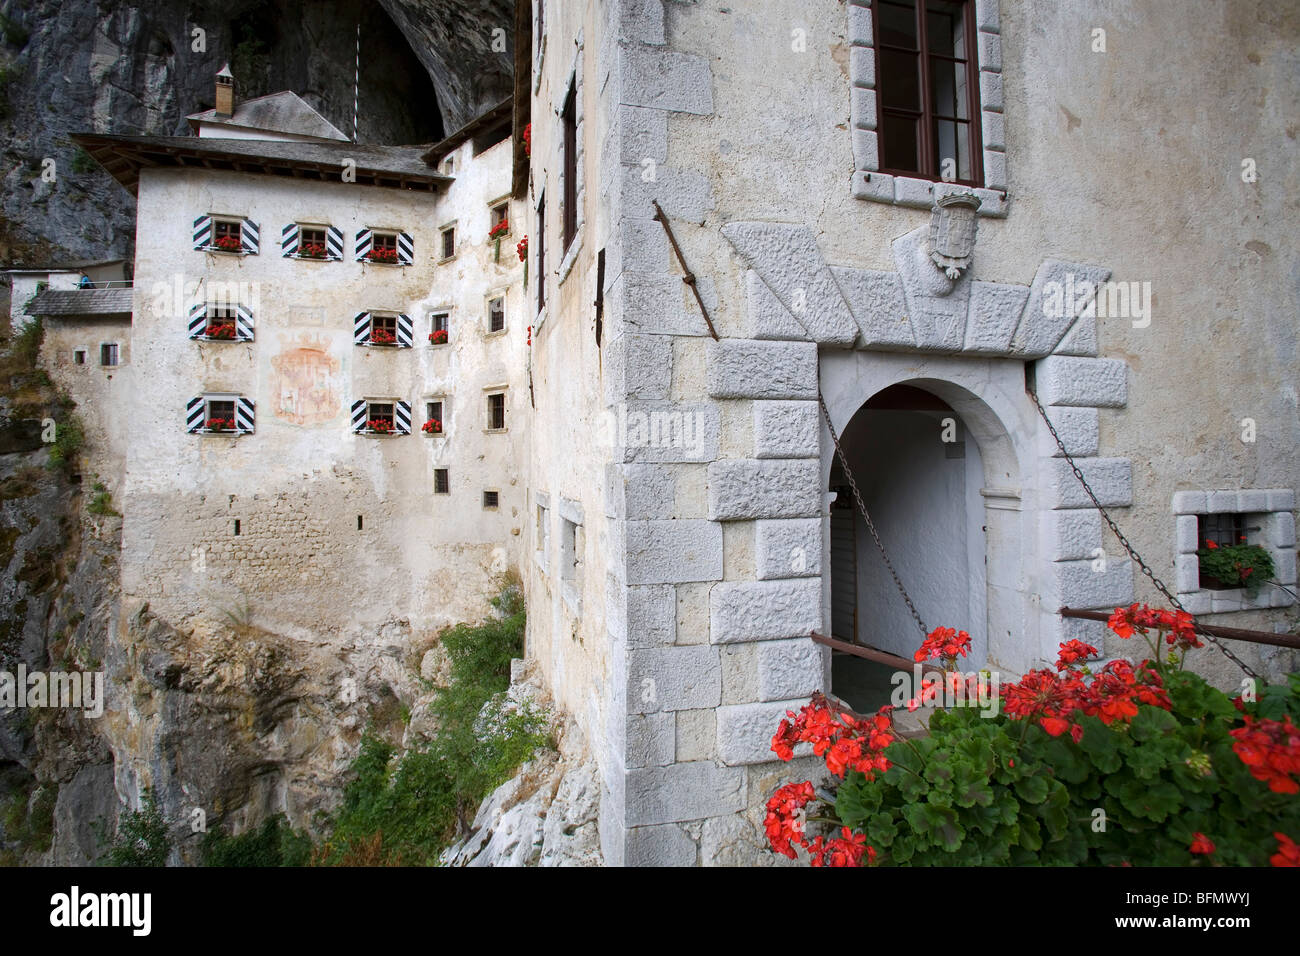 Slovenia, Predjama Castle. A Renaissance castle built within a cave mouth in southwestern Slovenia, near Postojna. Stock Photo